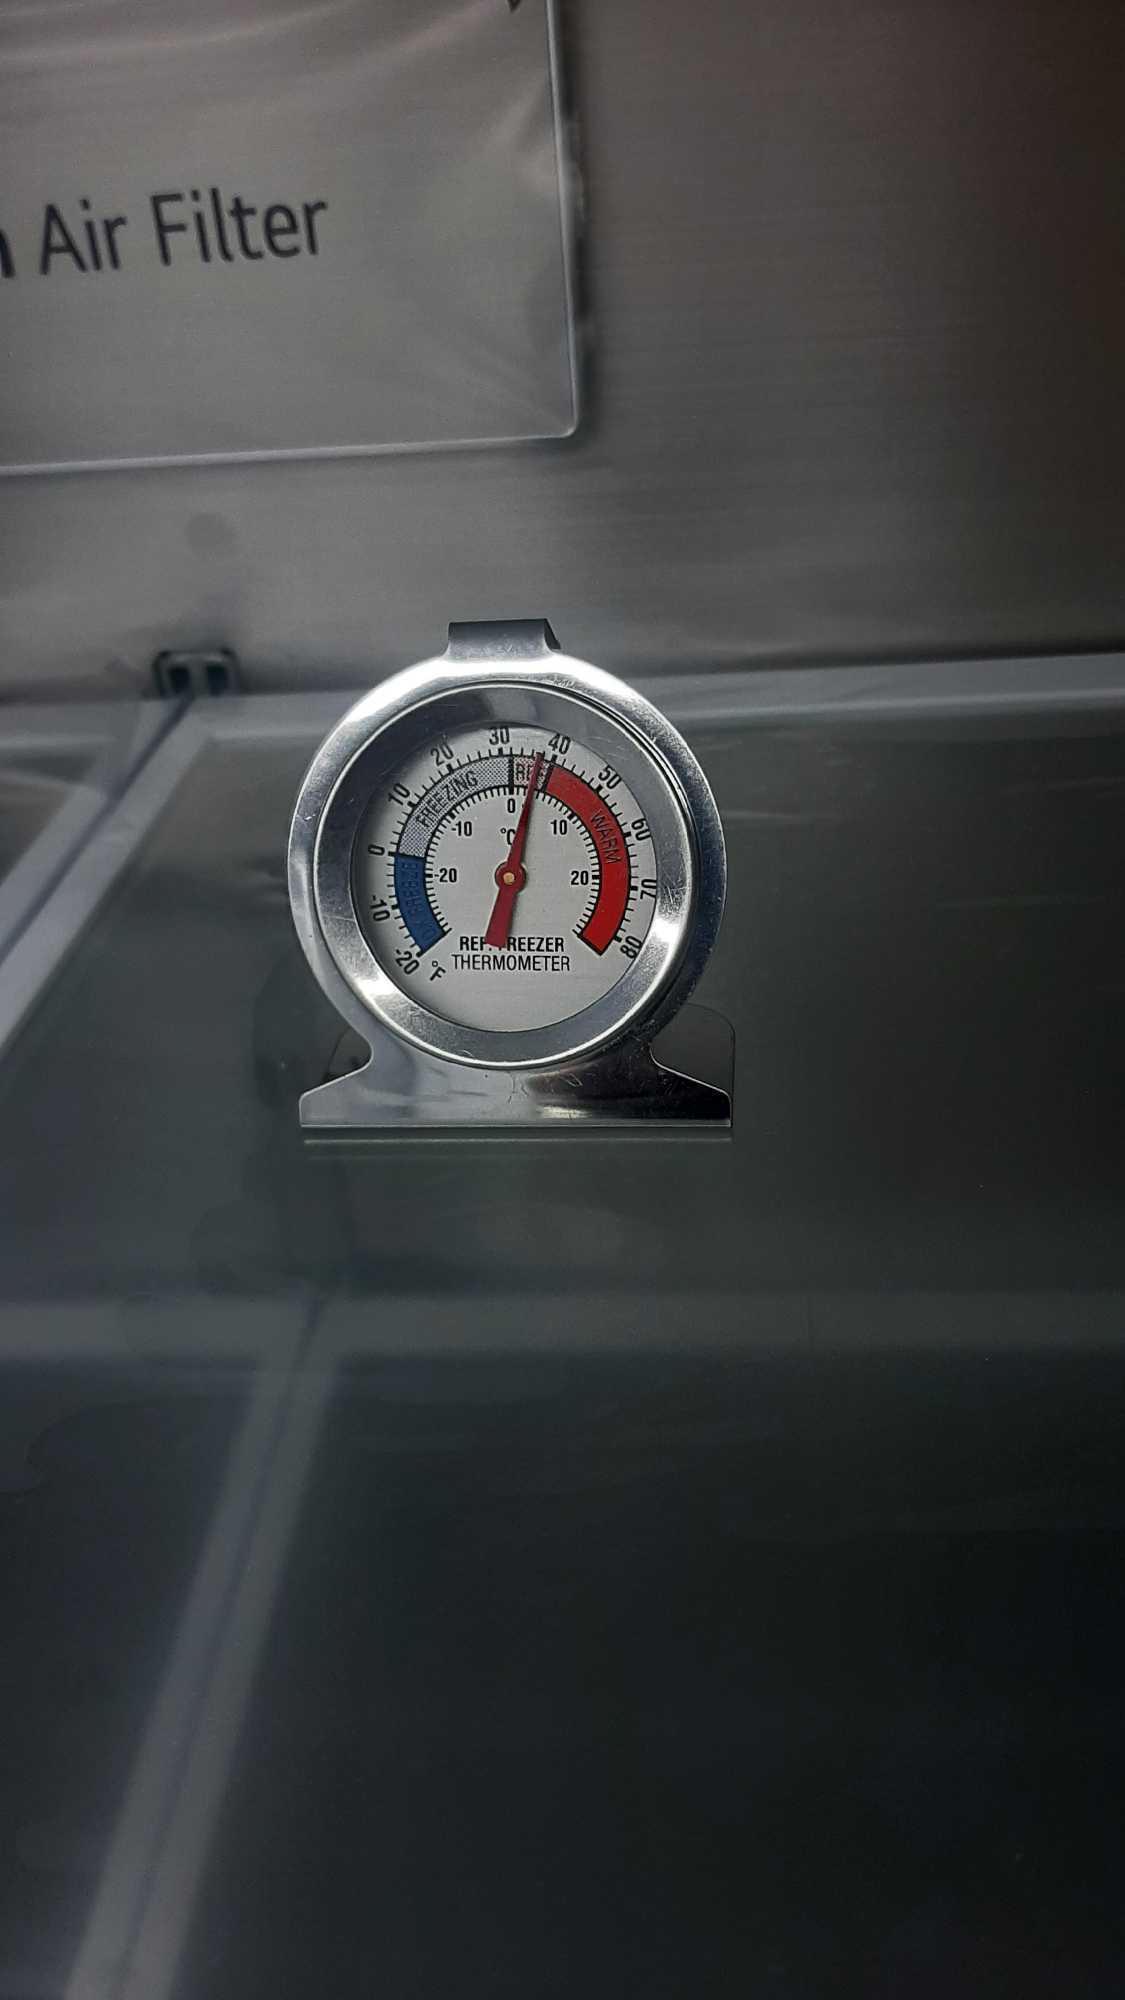 LG 26 cu. ft. Smart InstaView Counter-Depth Max French Door Refrigerator*COLD*UNUSED*